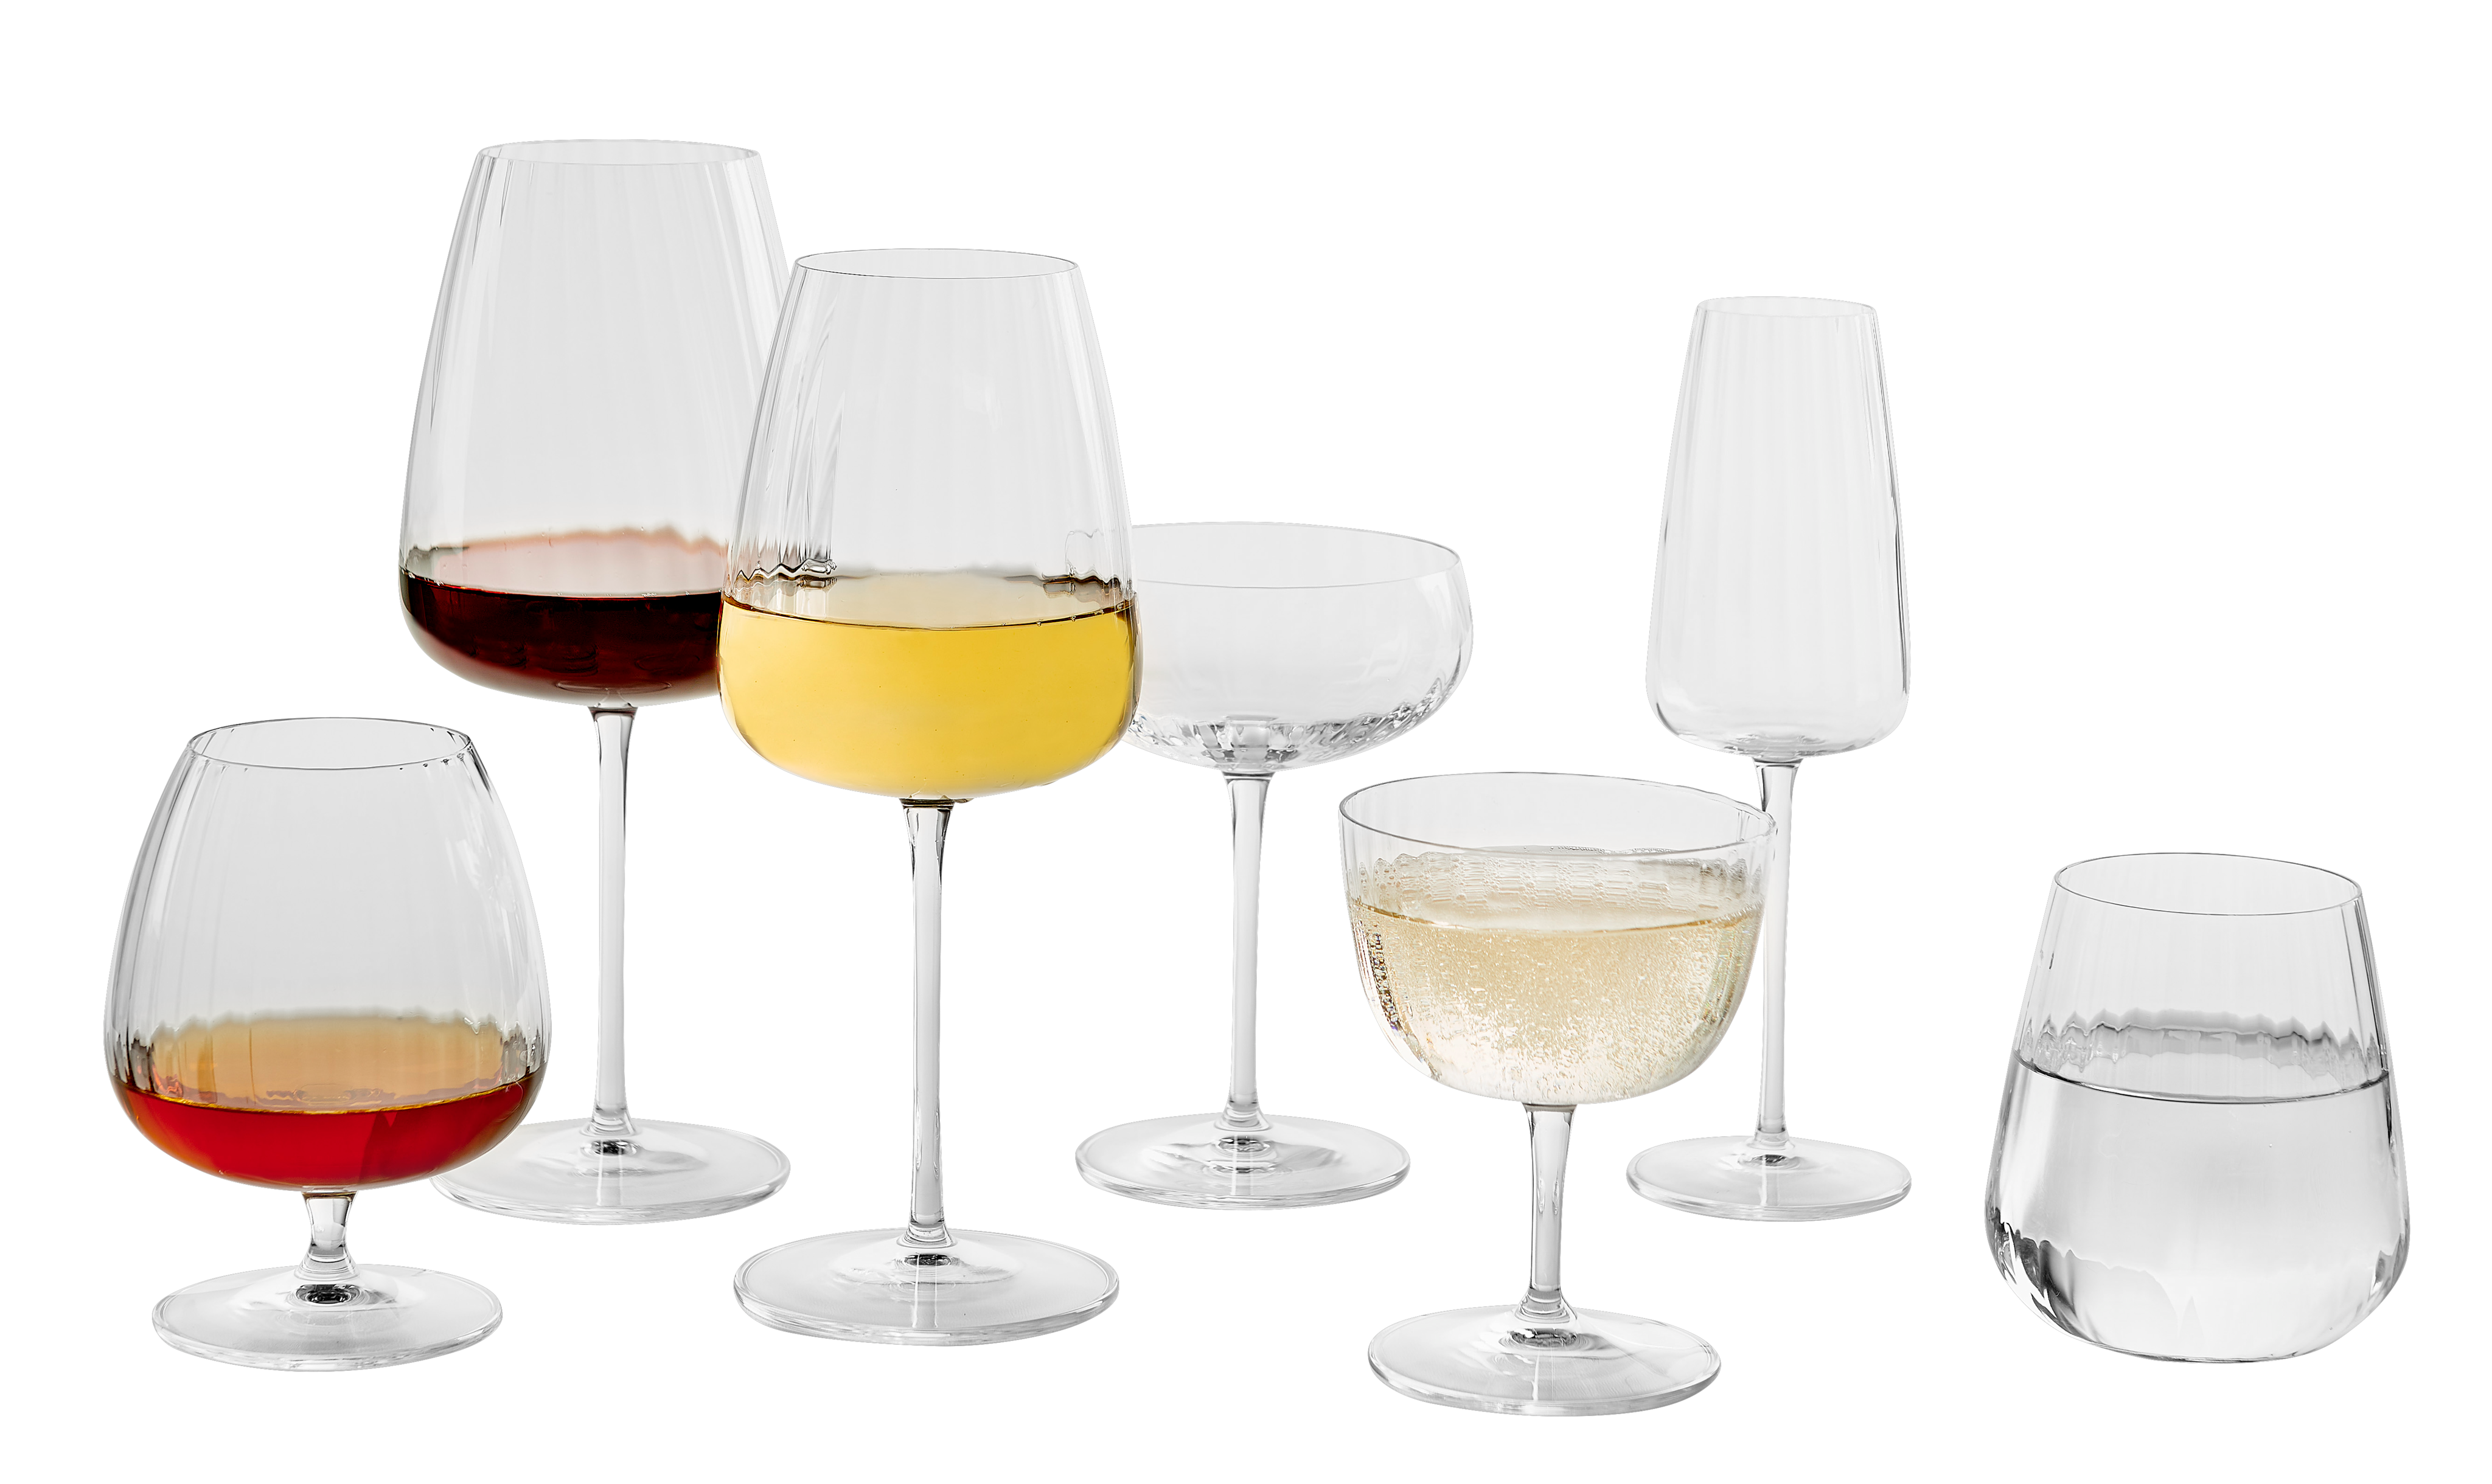 Set 2 Bicchieri Vino Bianco - Essence - Haus 269 - Cosaporto